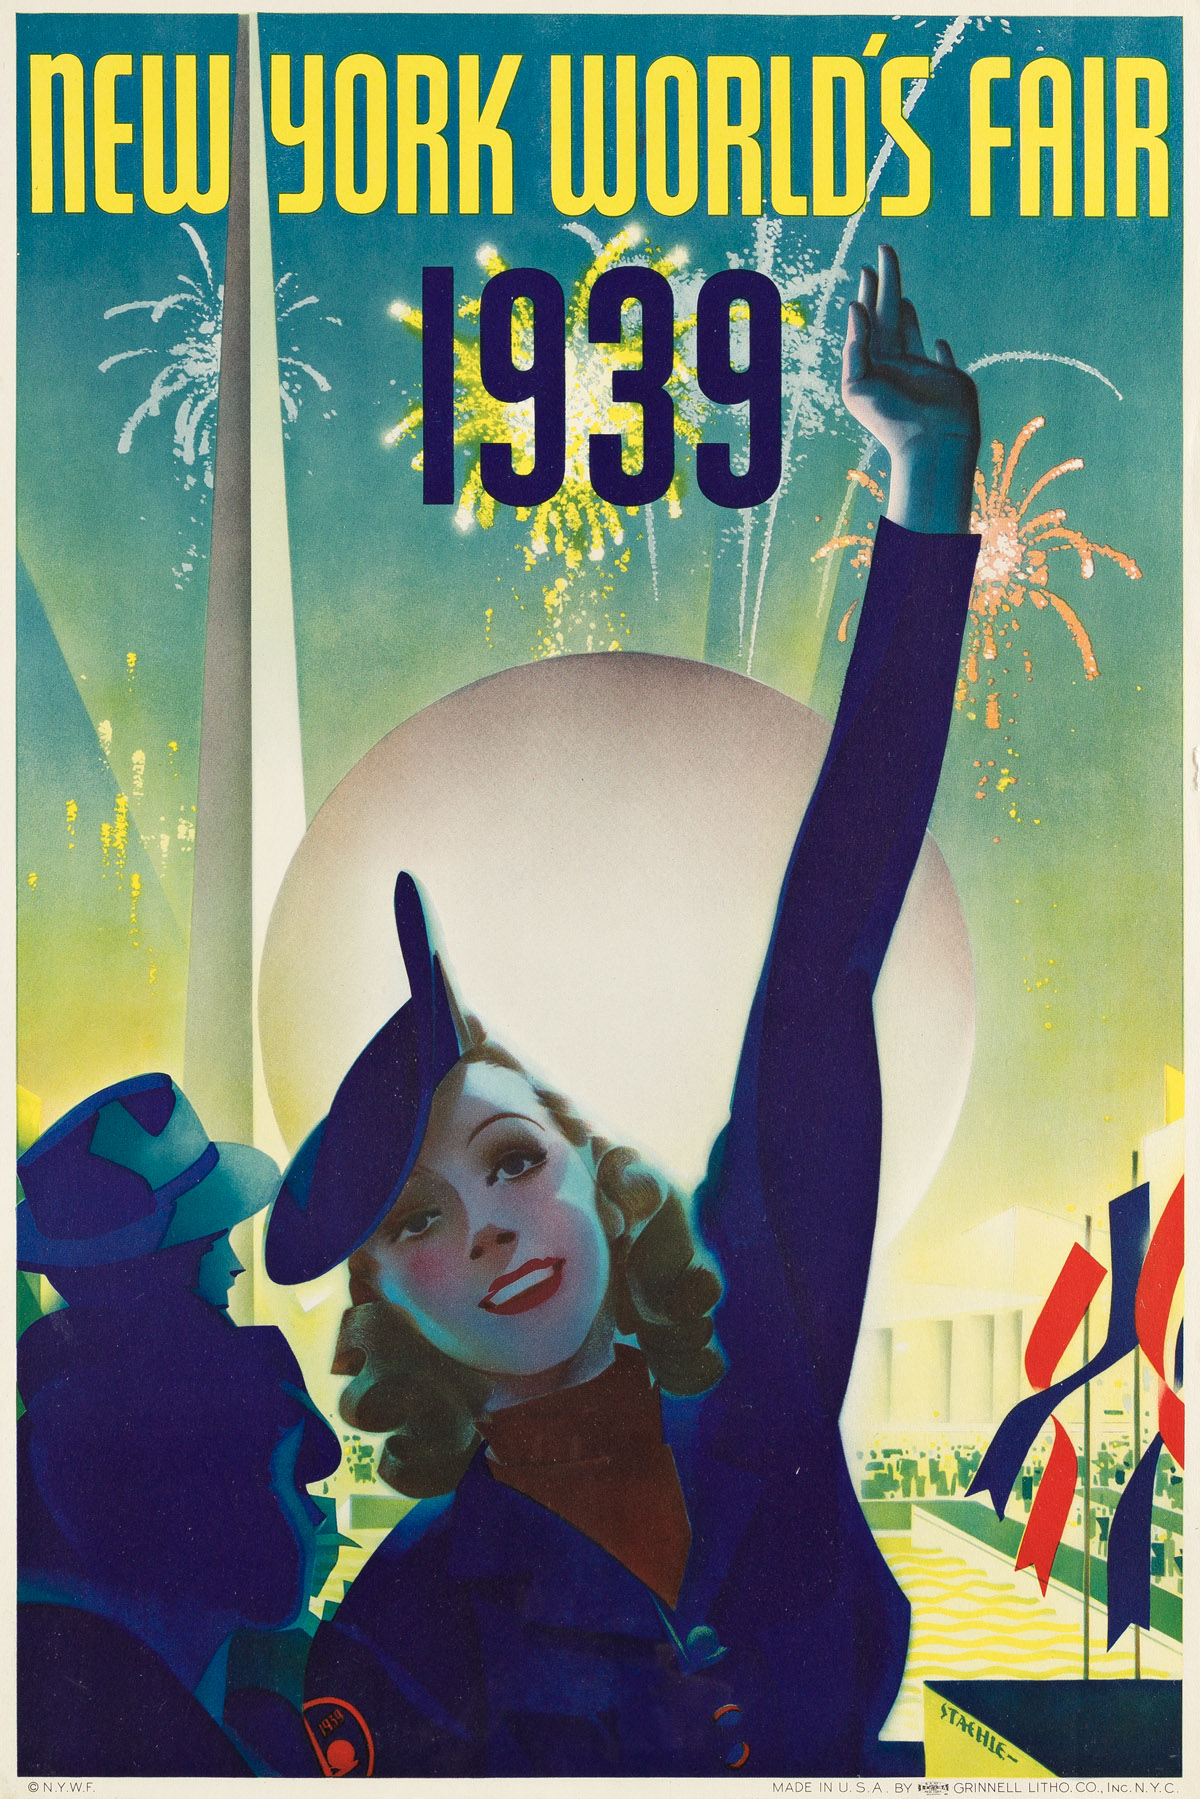 ALBERT STAEHLE (1899-1974) New York Worlds Fair.